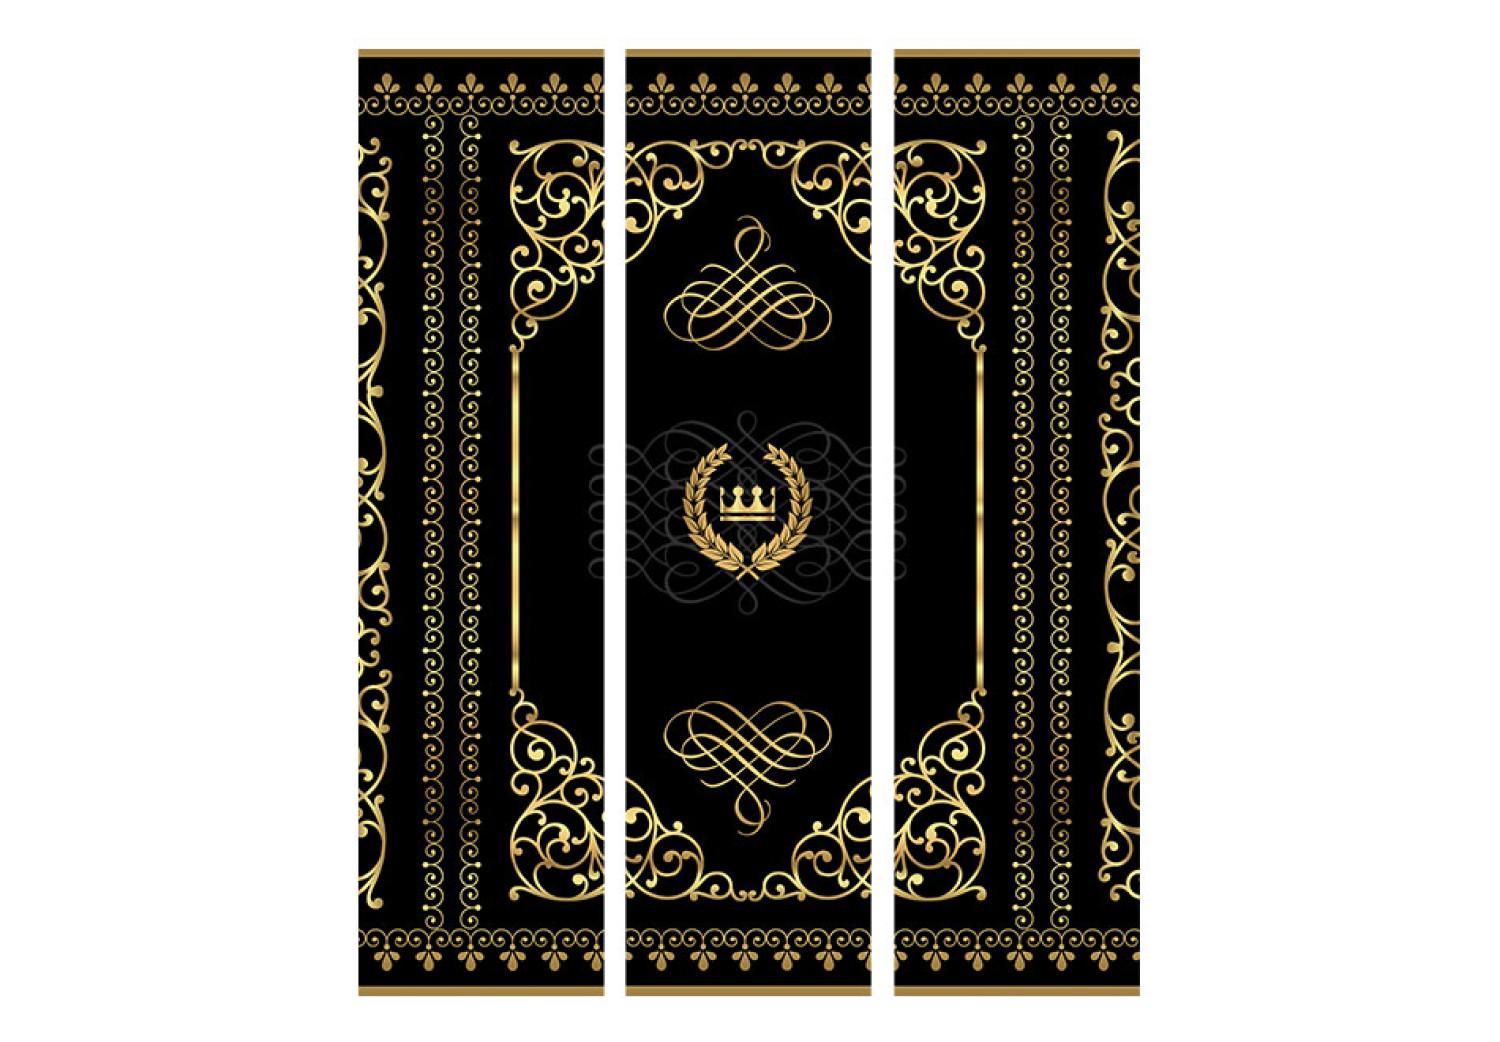 Room Divider Grace of the Night - golden ornamental patterns on black background in retro motif